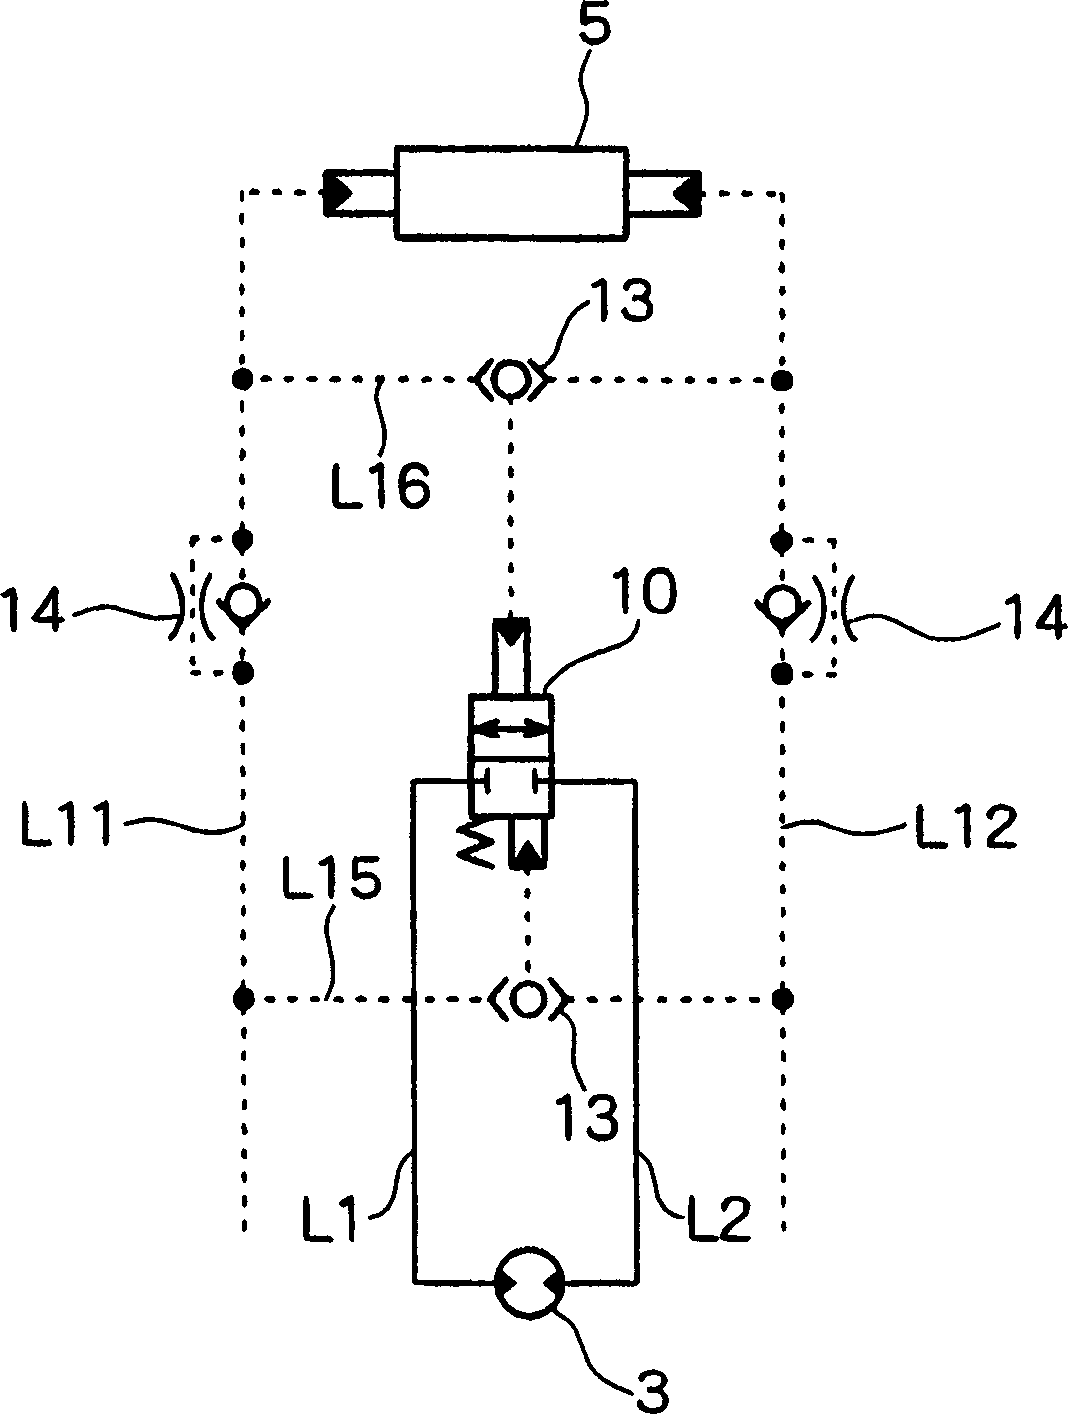 Rotary control circuit